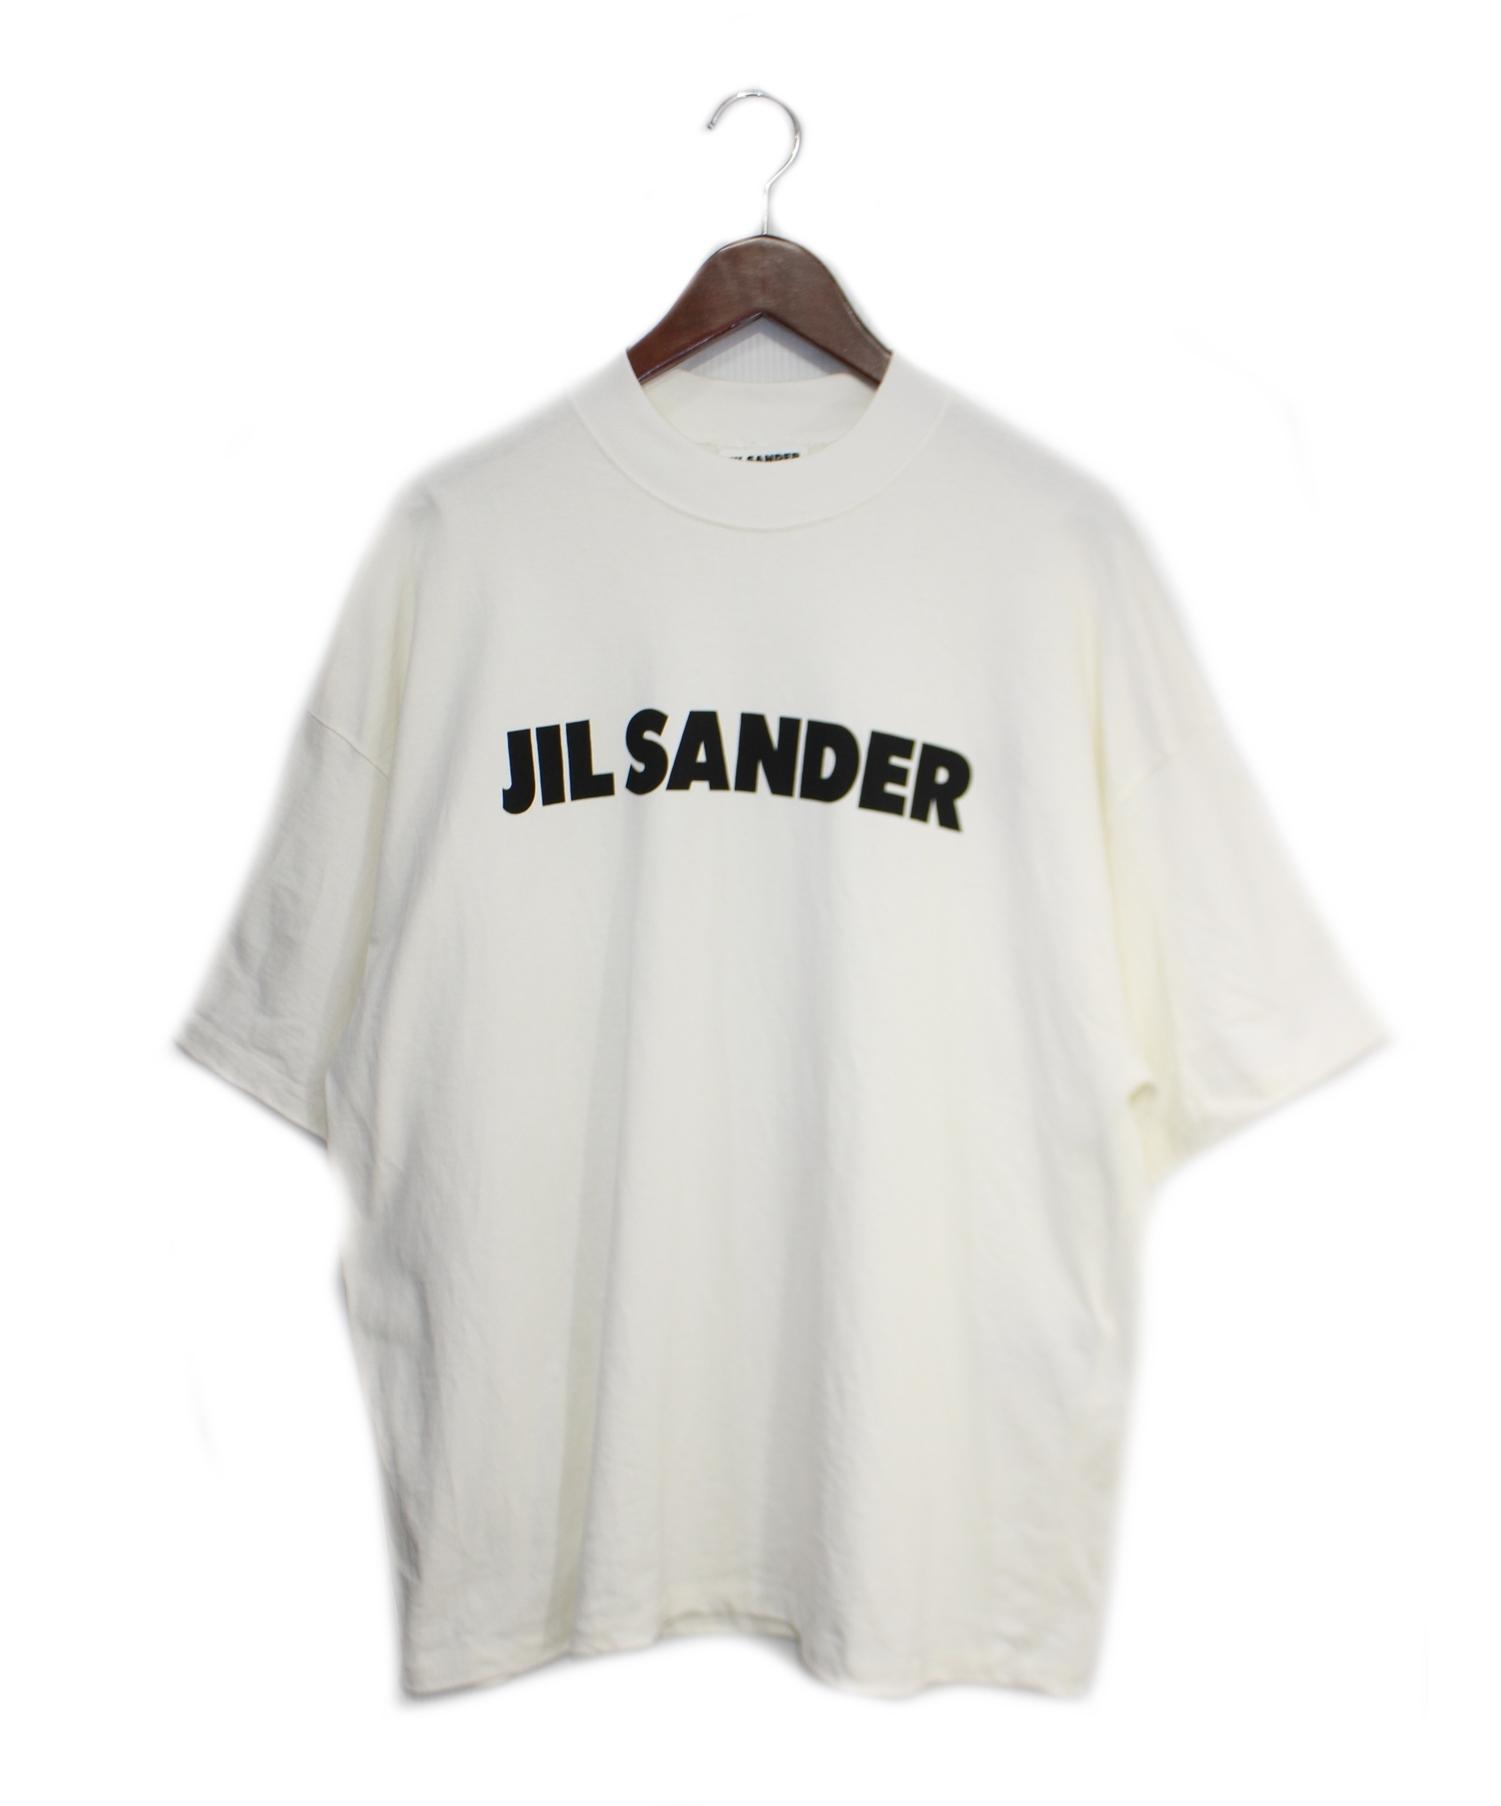 JIL SANDER Tシャツ - rehda.com